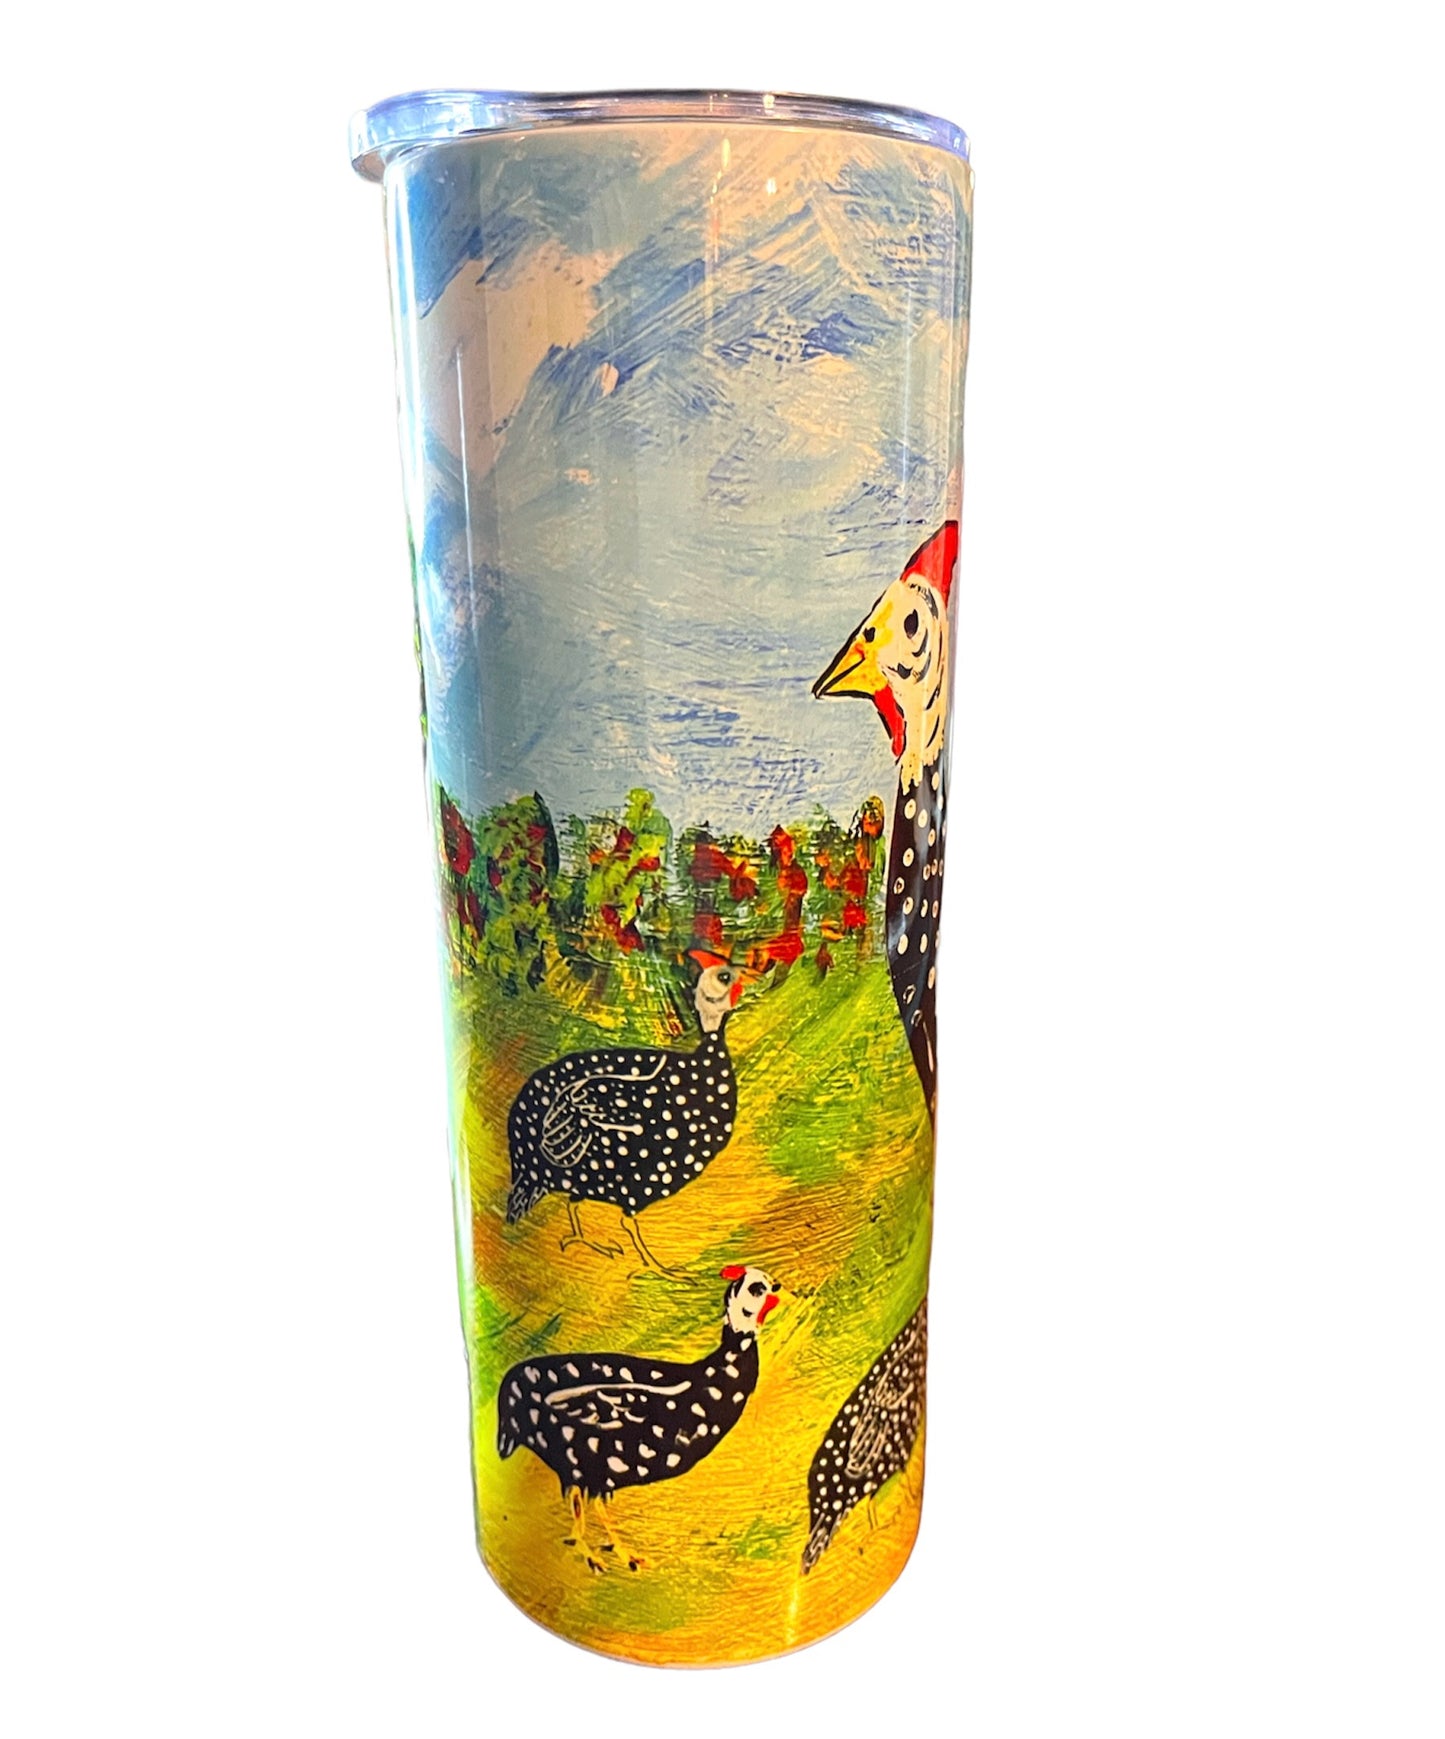 Art Painting Guinea Fowl Barn Scene Stainless Tumbler Cup Gift